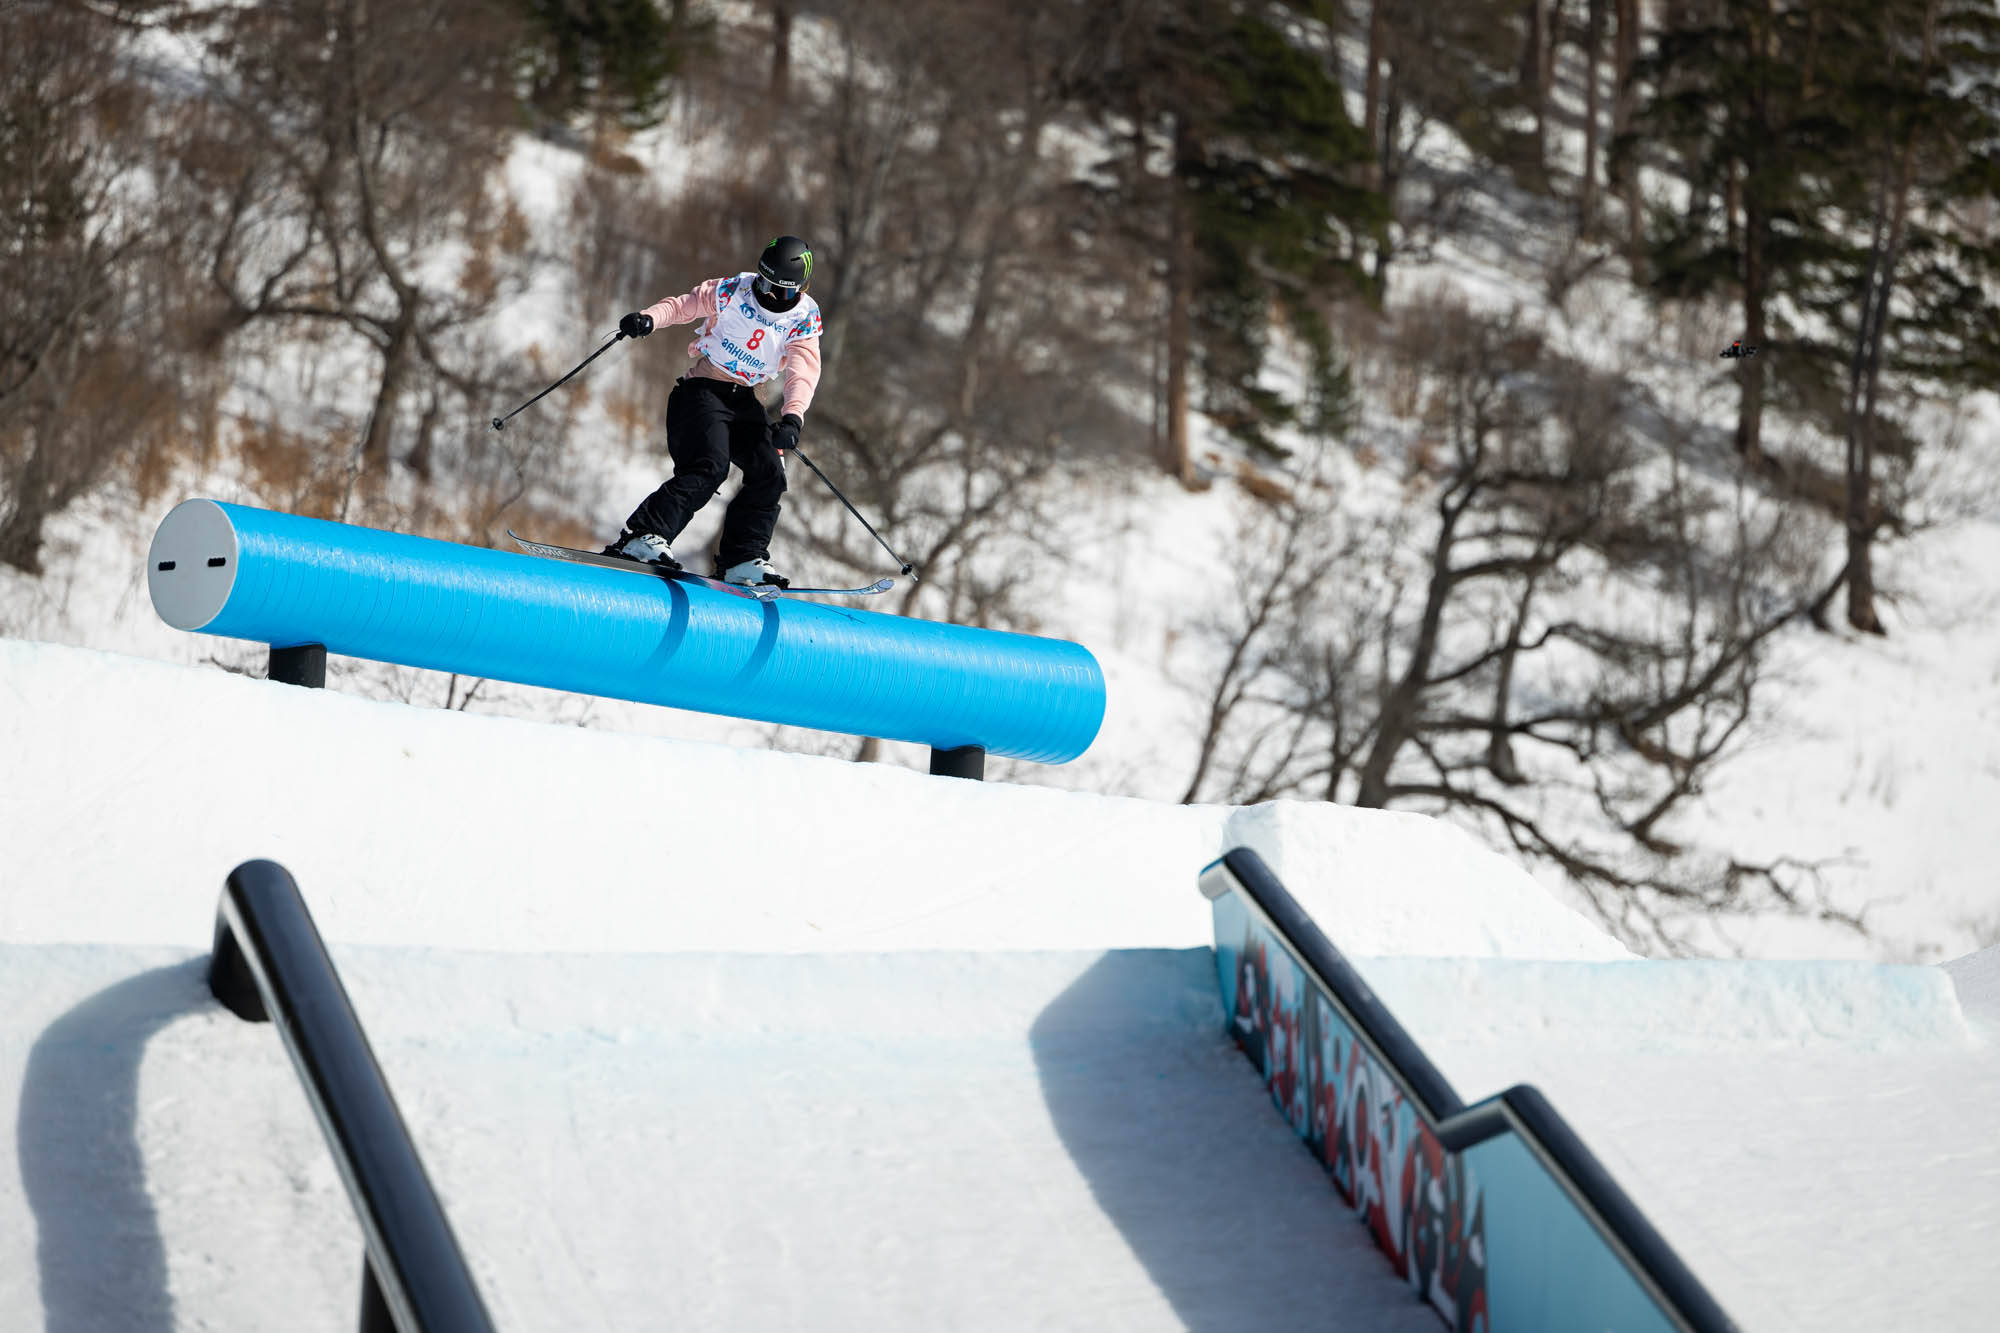 FIS Freestyle Ski, Snowboard and Freeski World Championships - Bakuriani GEO - Freeski Slopestyle © Miha Matavz/FIS